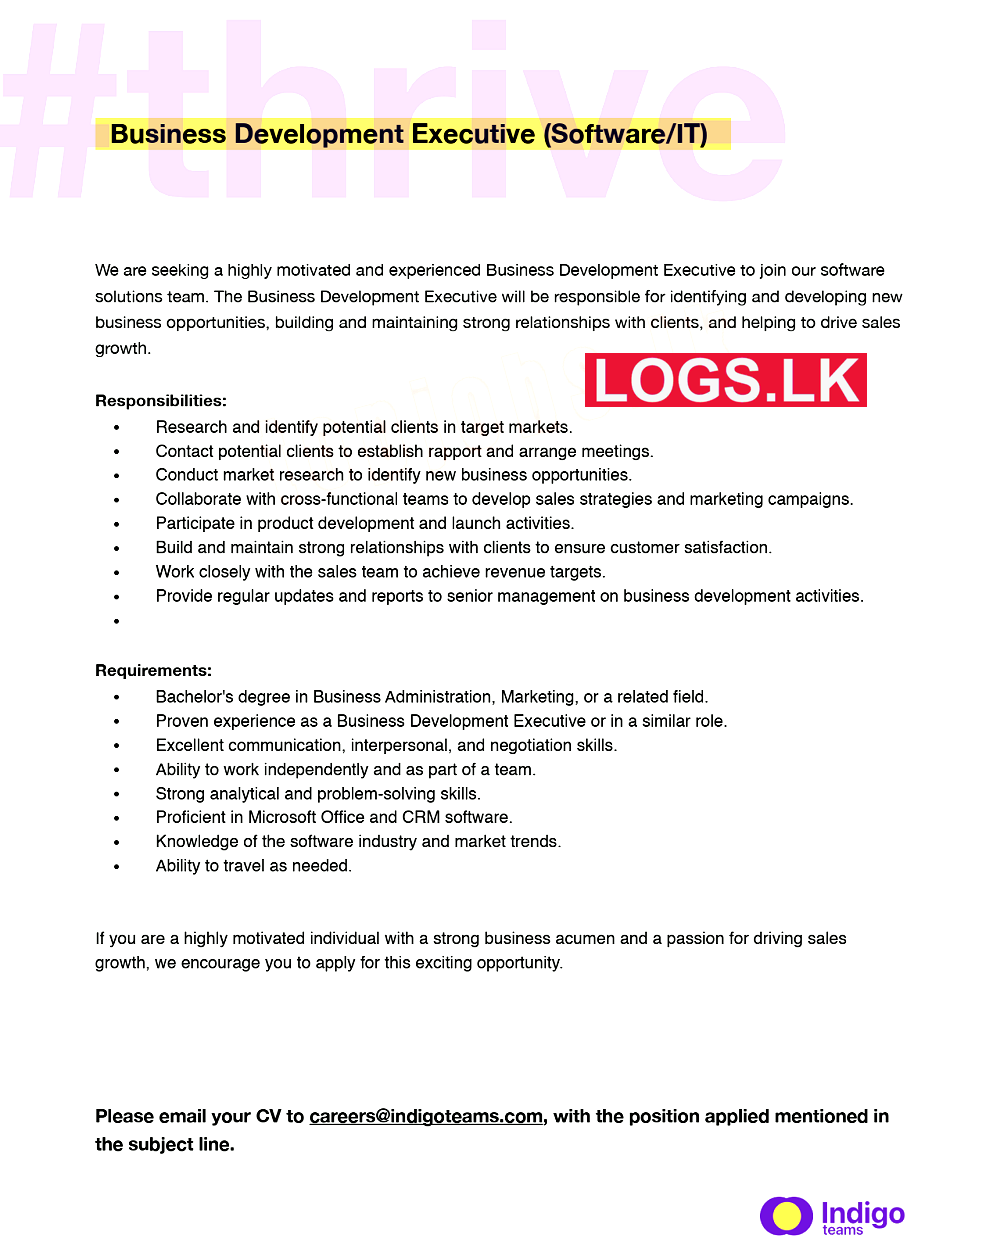 Business Development Executive (Software / IT) at Indigo Teams Job Vacancies in Sri Lanka